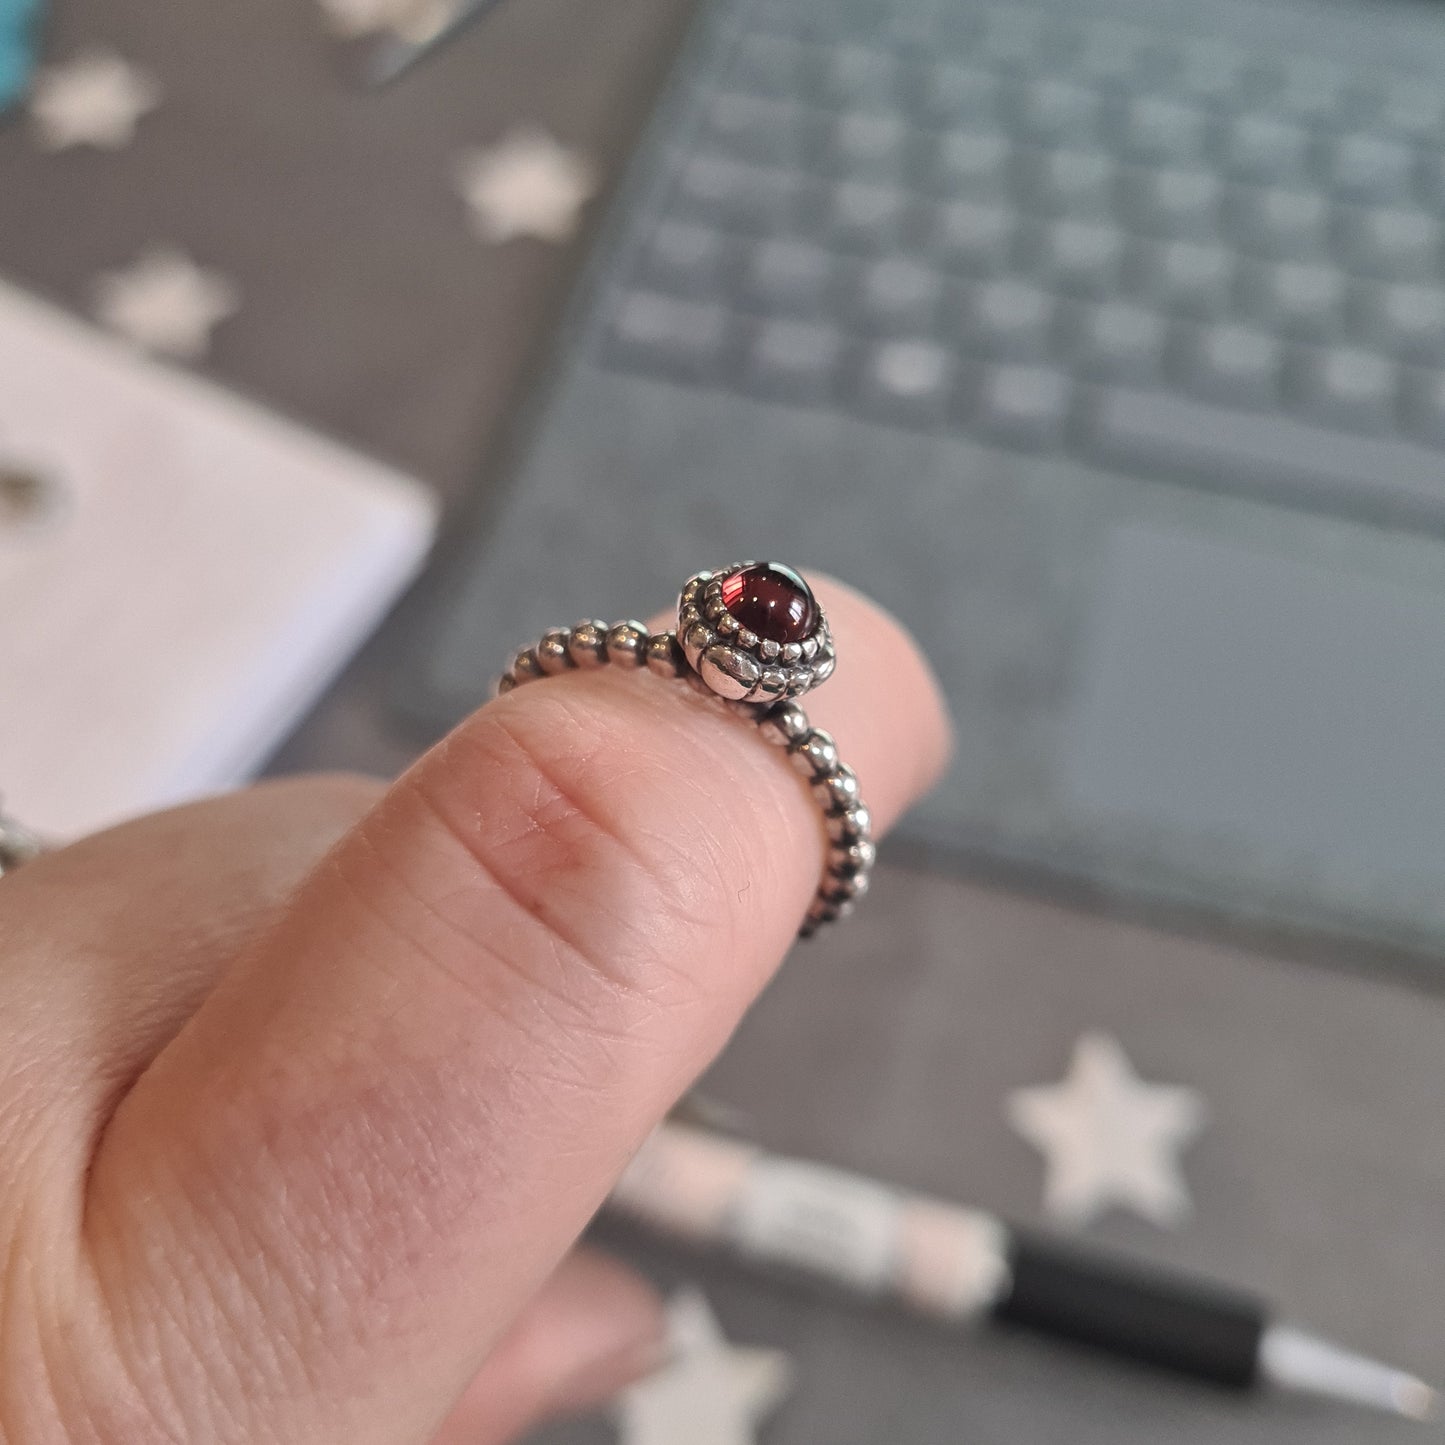 Genuine Pandora Birthstone Ring Size .. Red Garnet January Ring